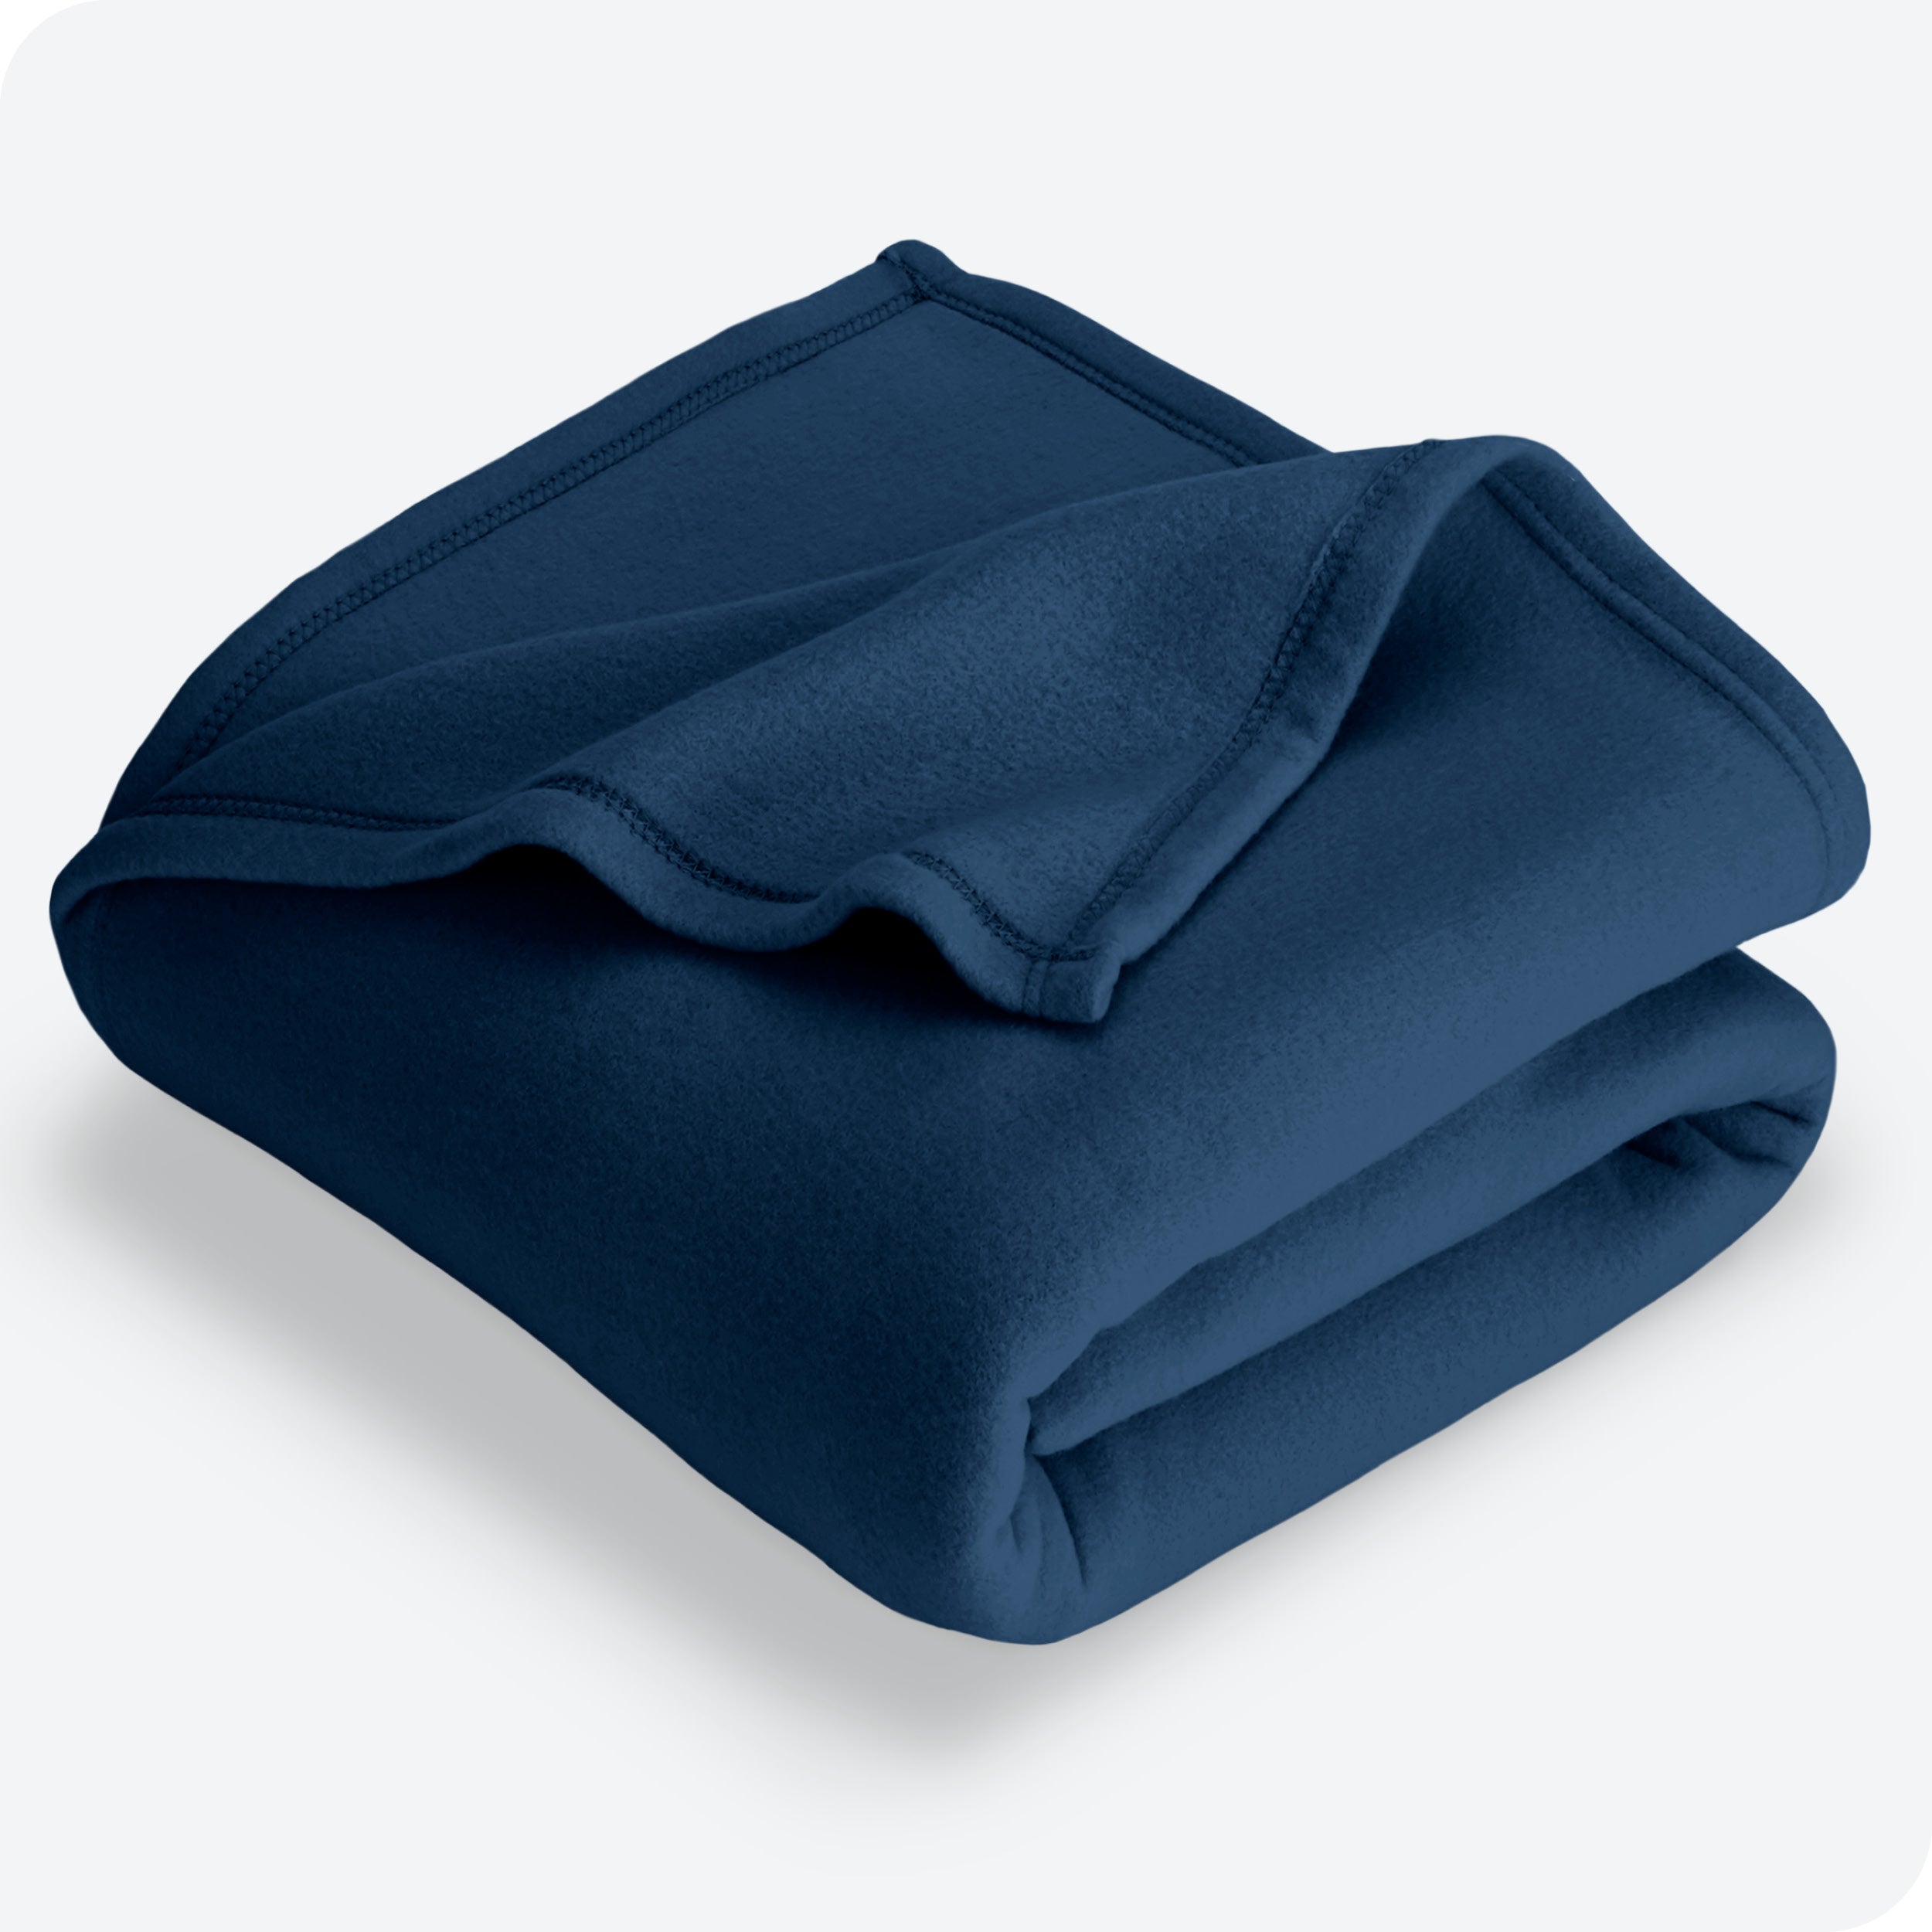 Dark blue polar fleece blanket folded with 1 corner folded back